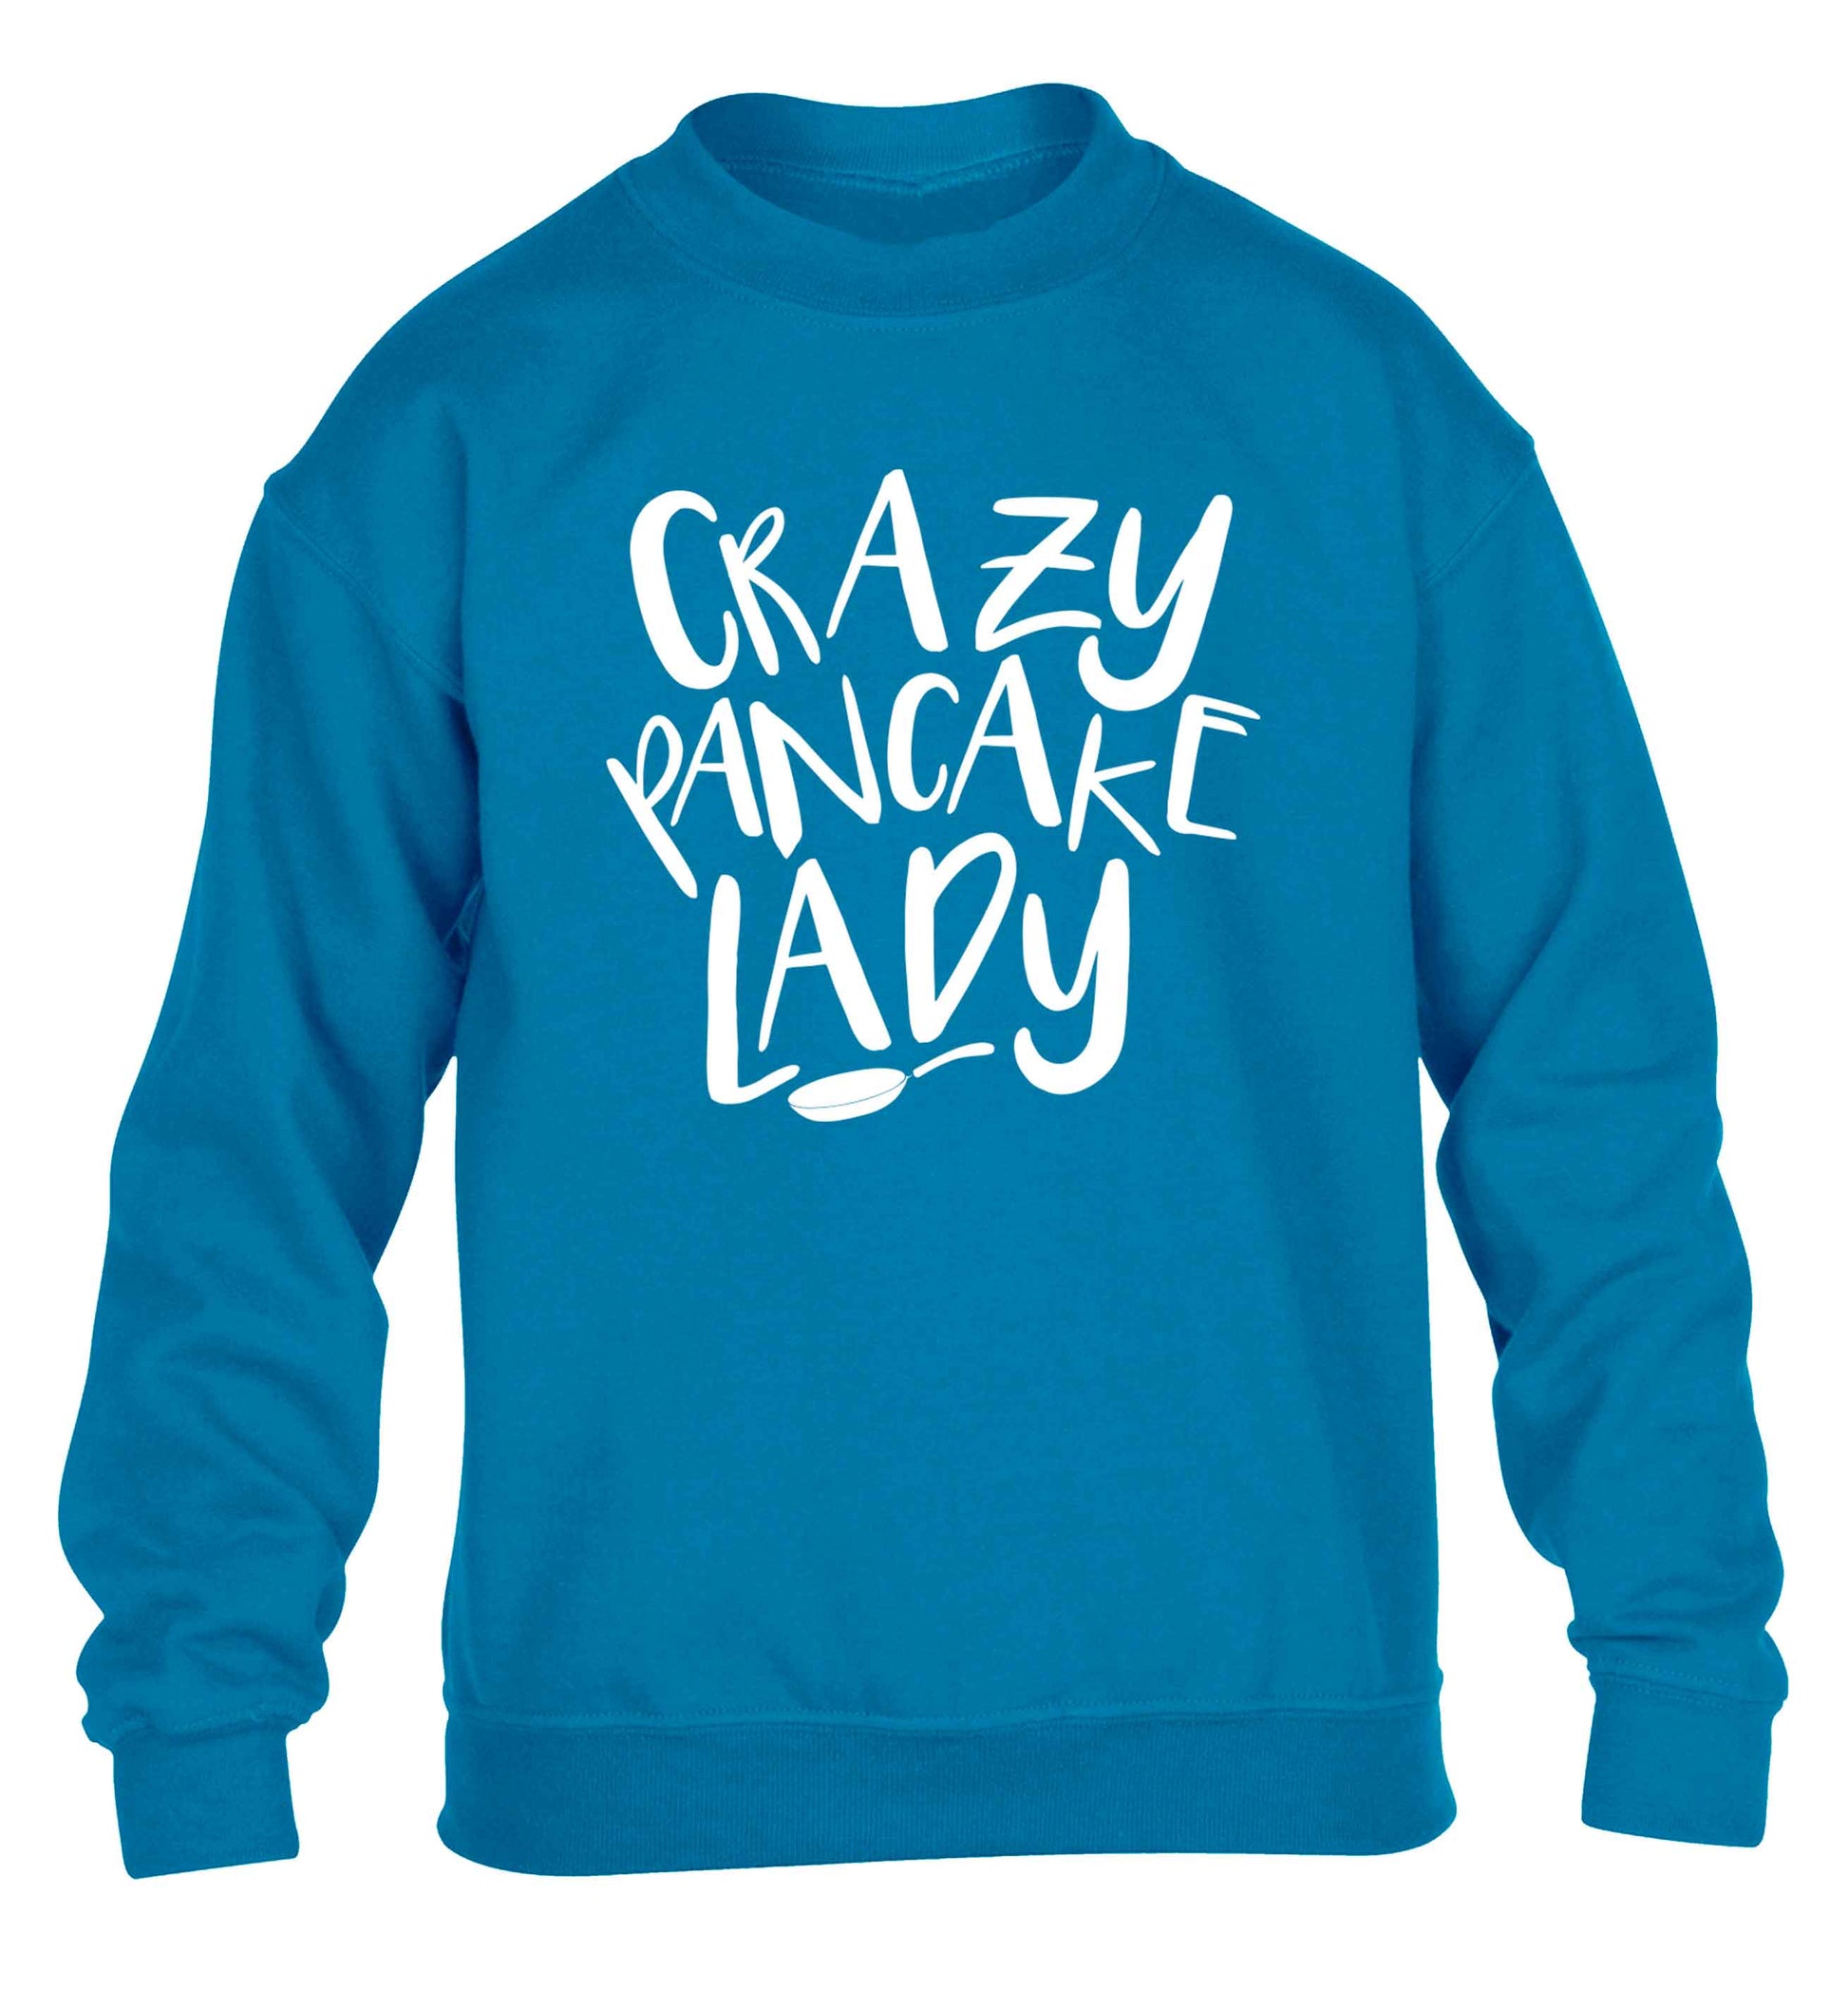 Crazy pancake lady children's blue sweater 12-13 Years